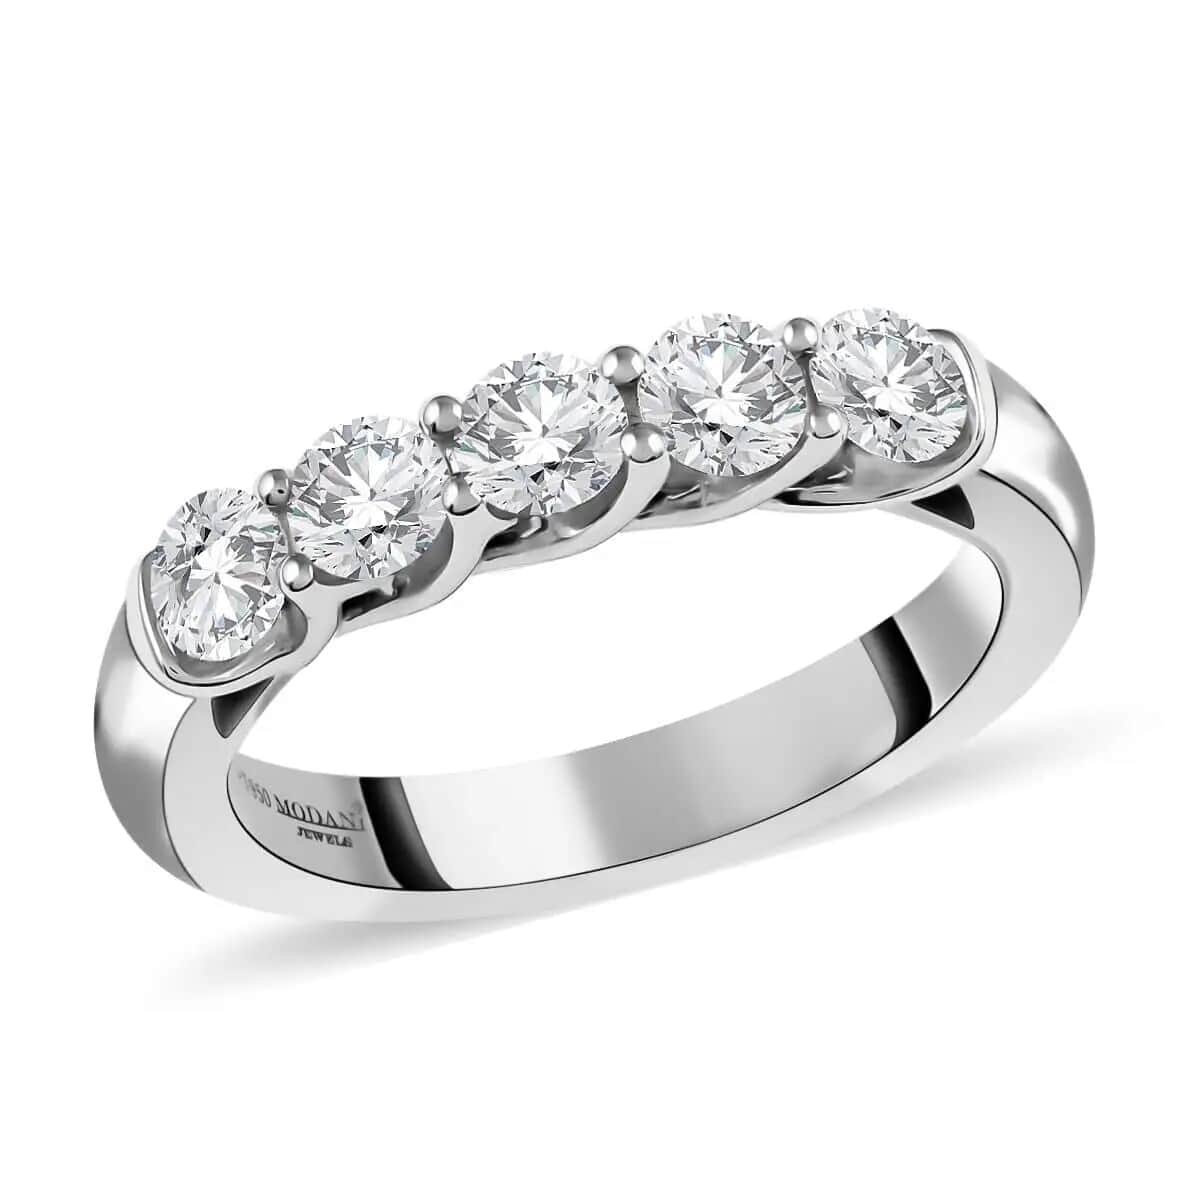 Modani 950 Platinum Natural Diamond G VVS2 Ring (Size 7.0) 8 Grams 1.00 ctw image number 0